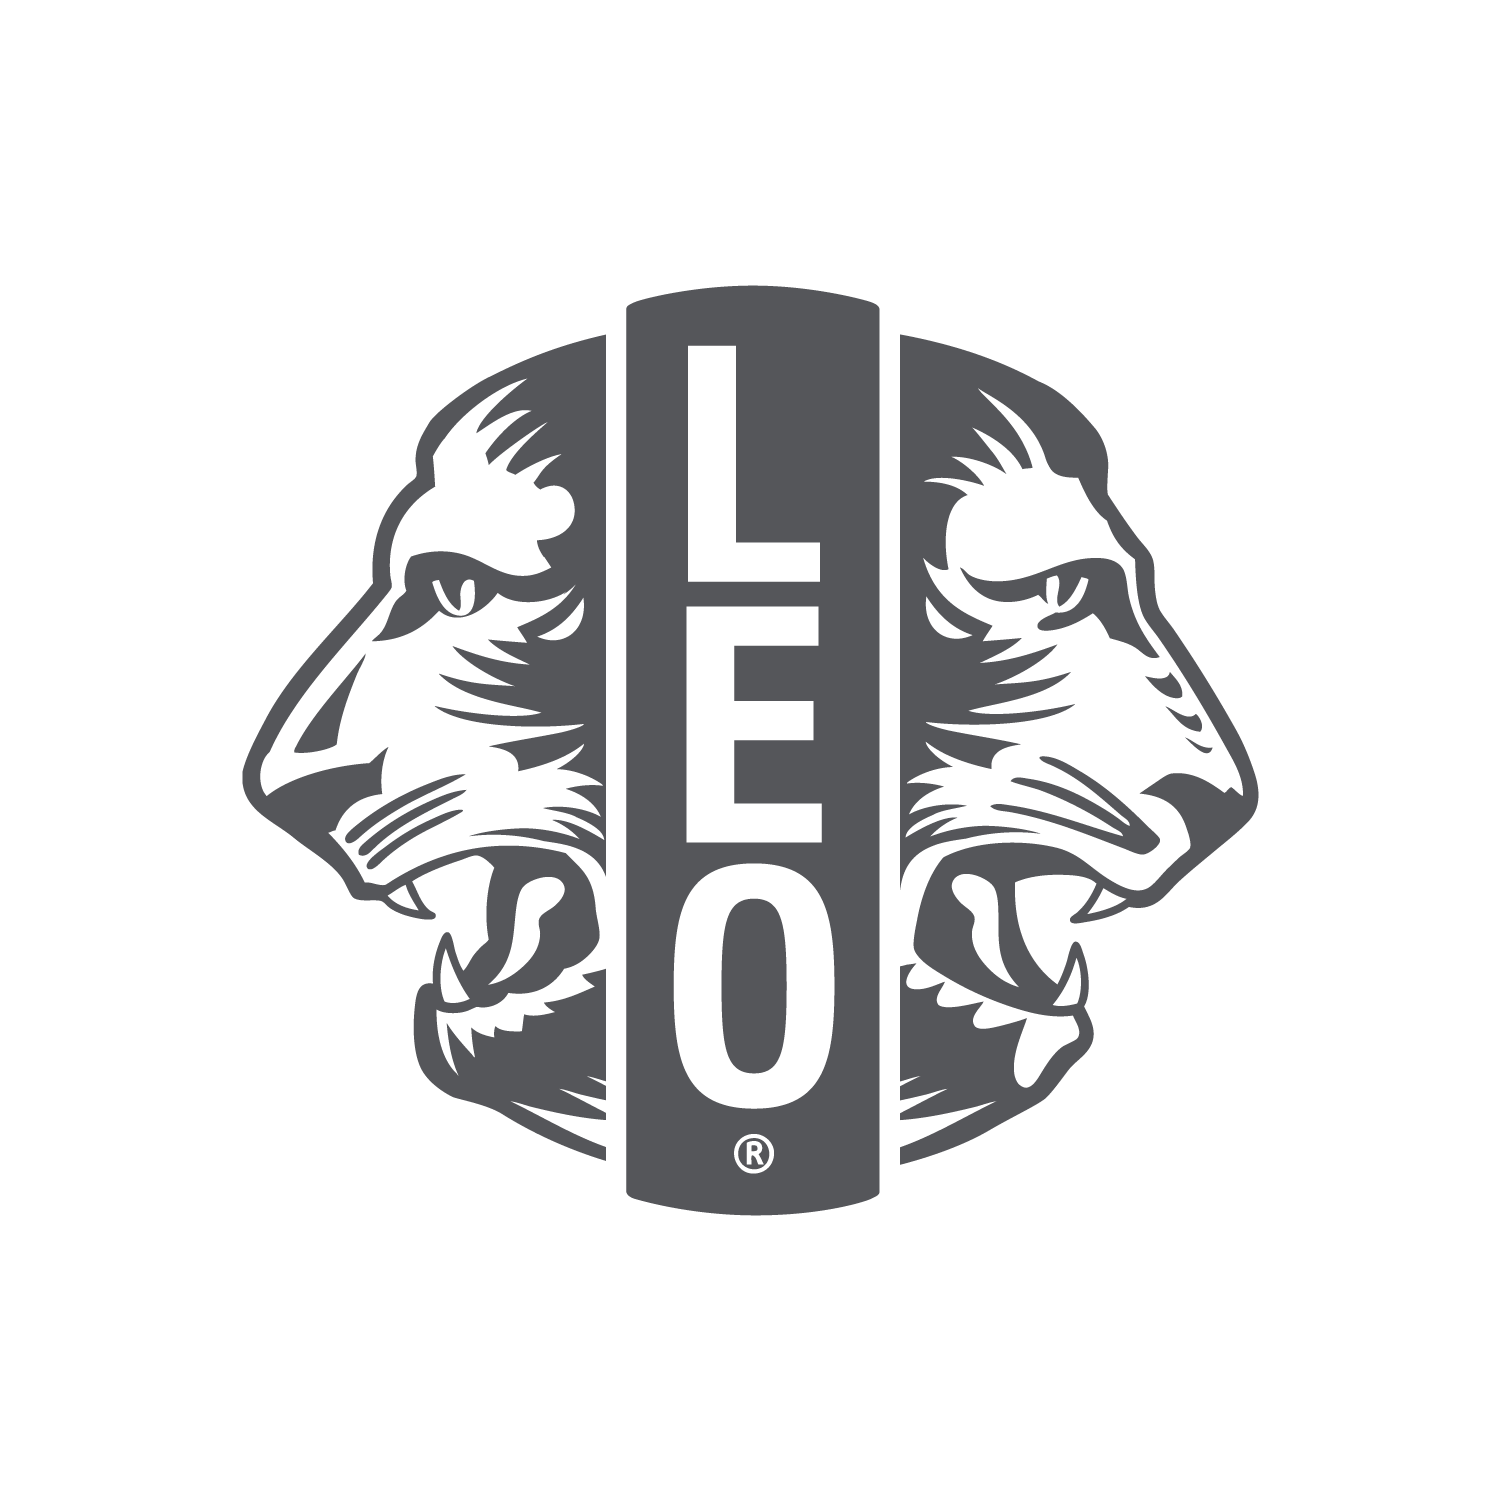 Leos Logo